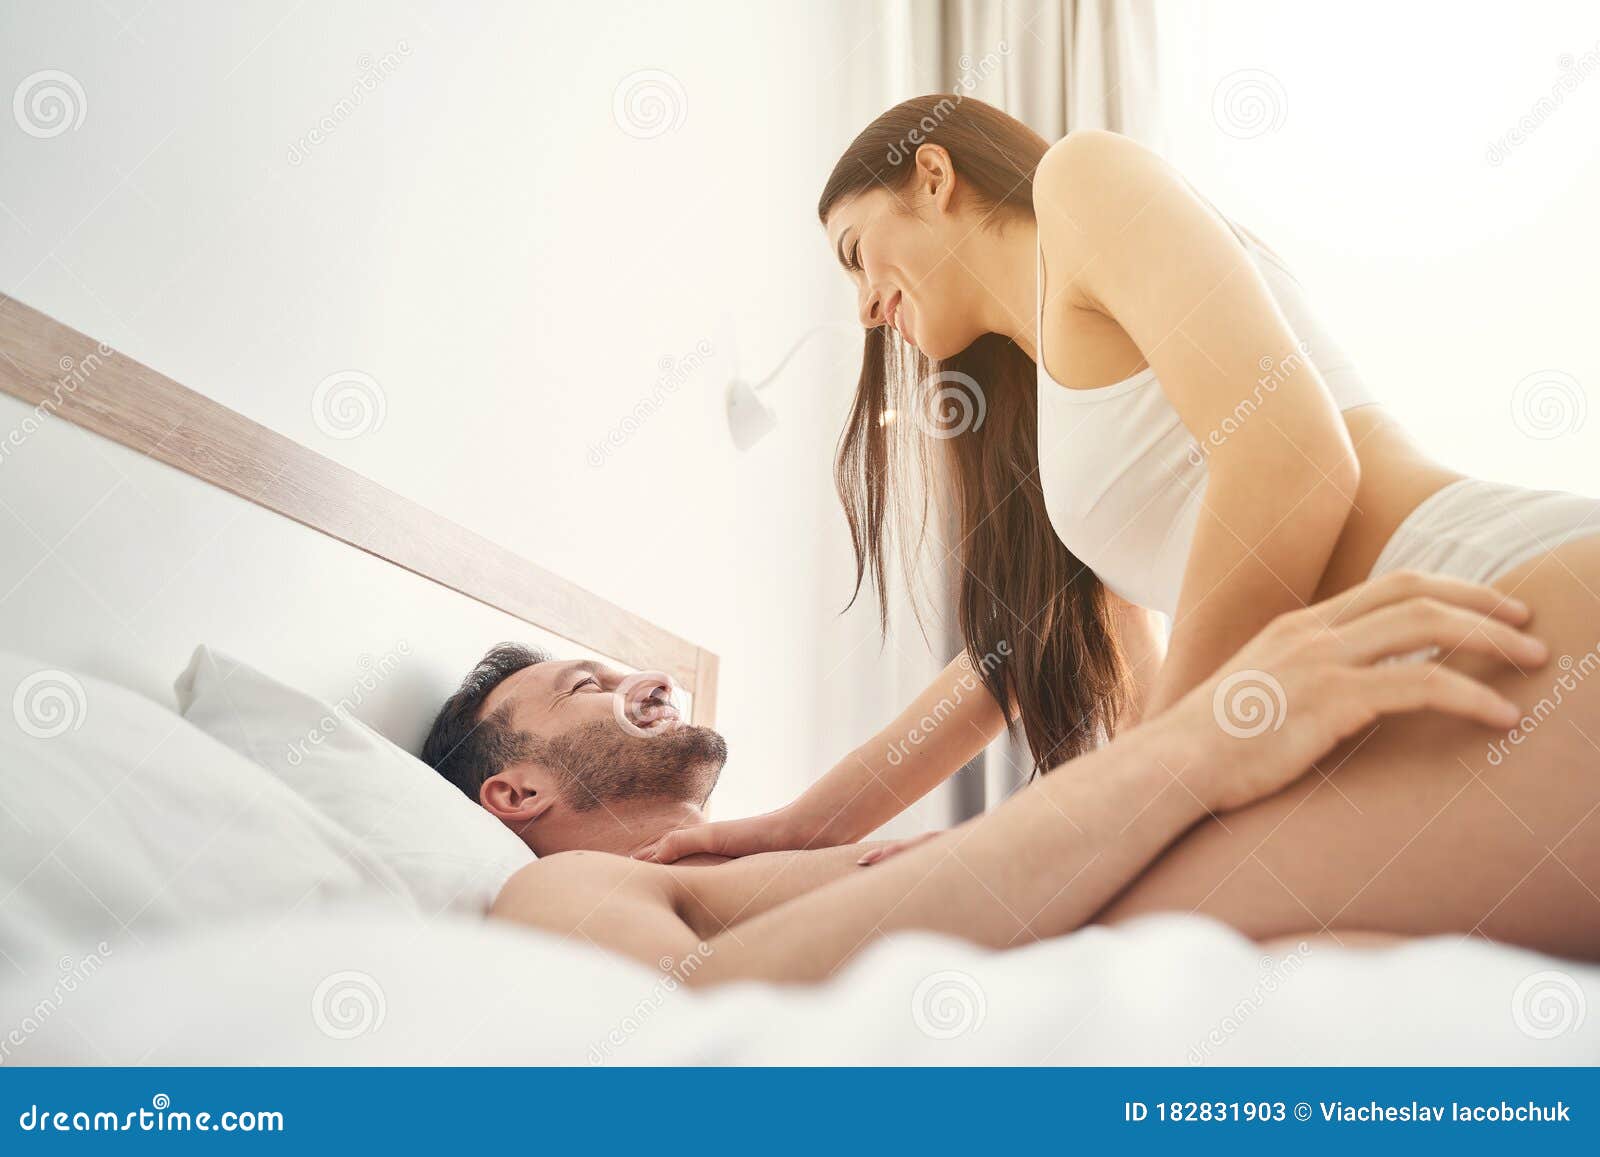 playful wife satisfy men